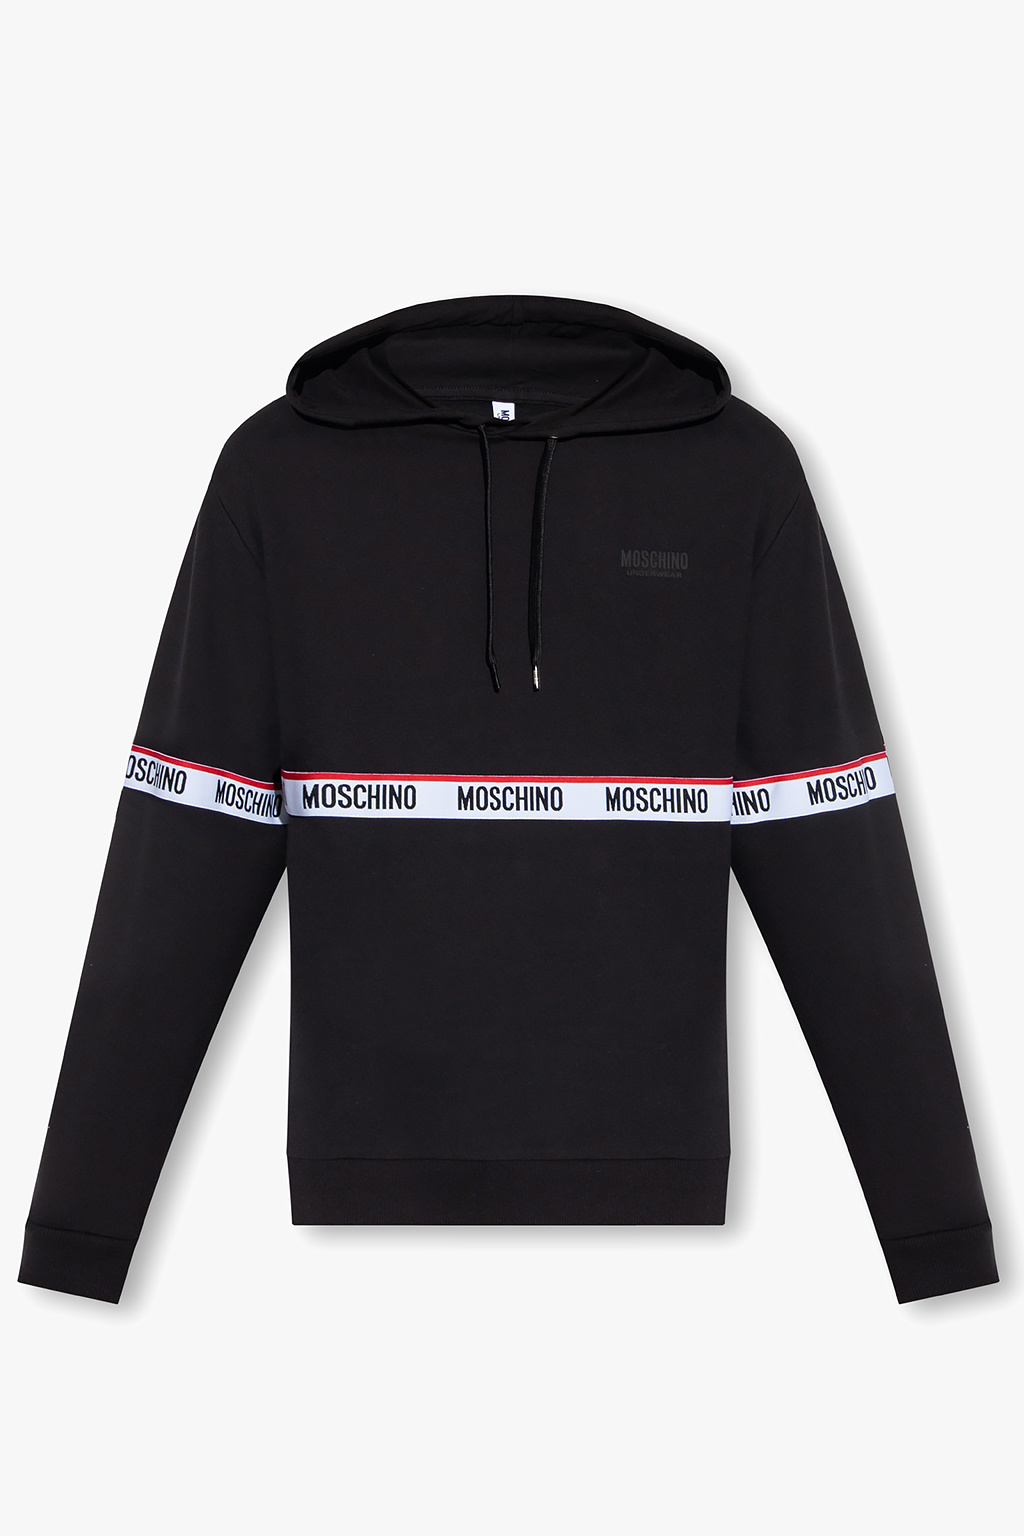 Moschino logo print pullover hoodie - Black